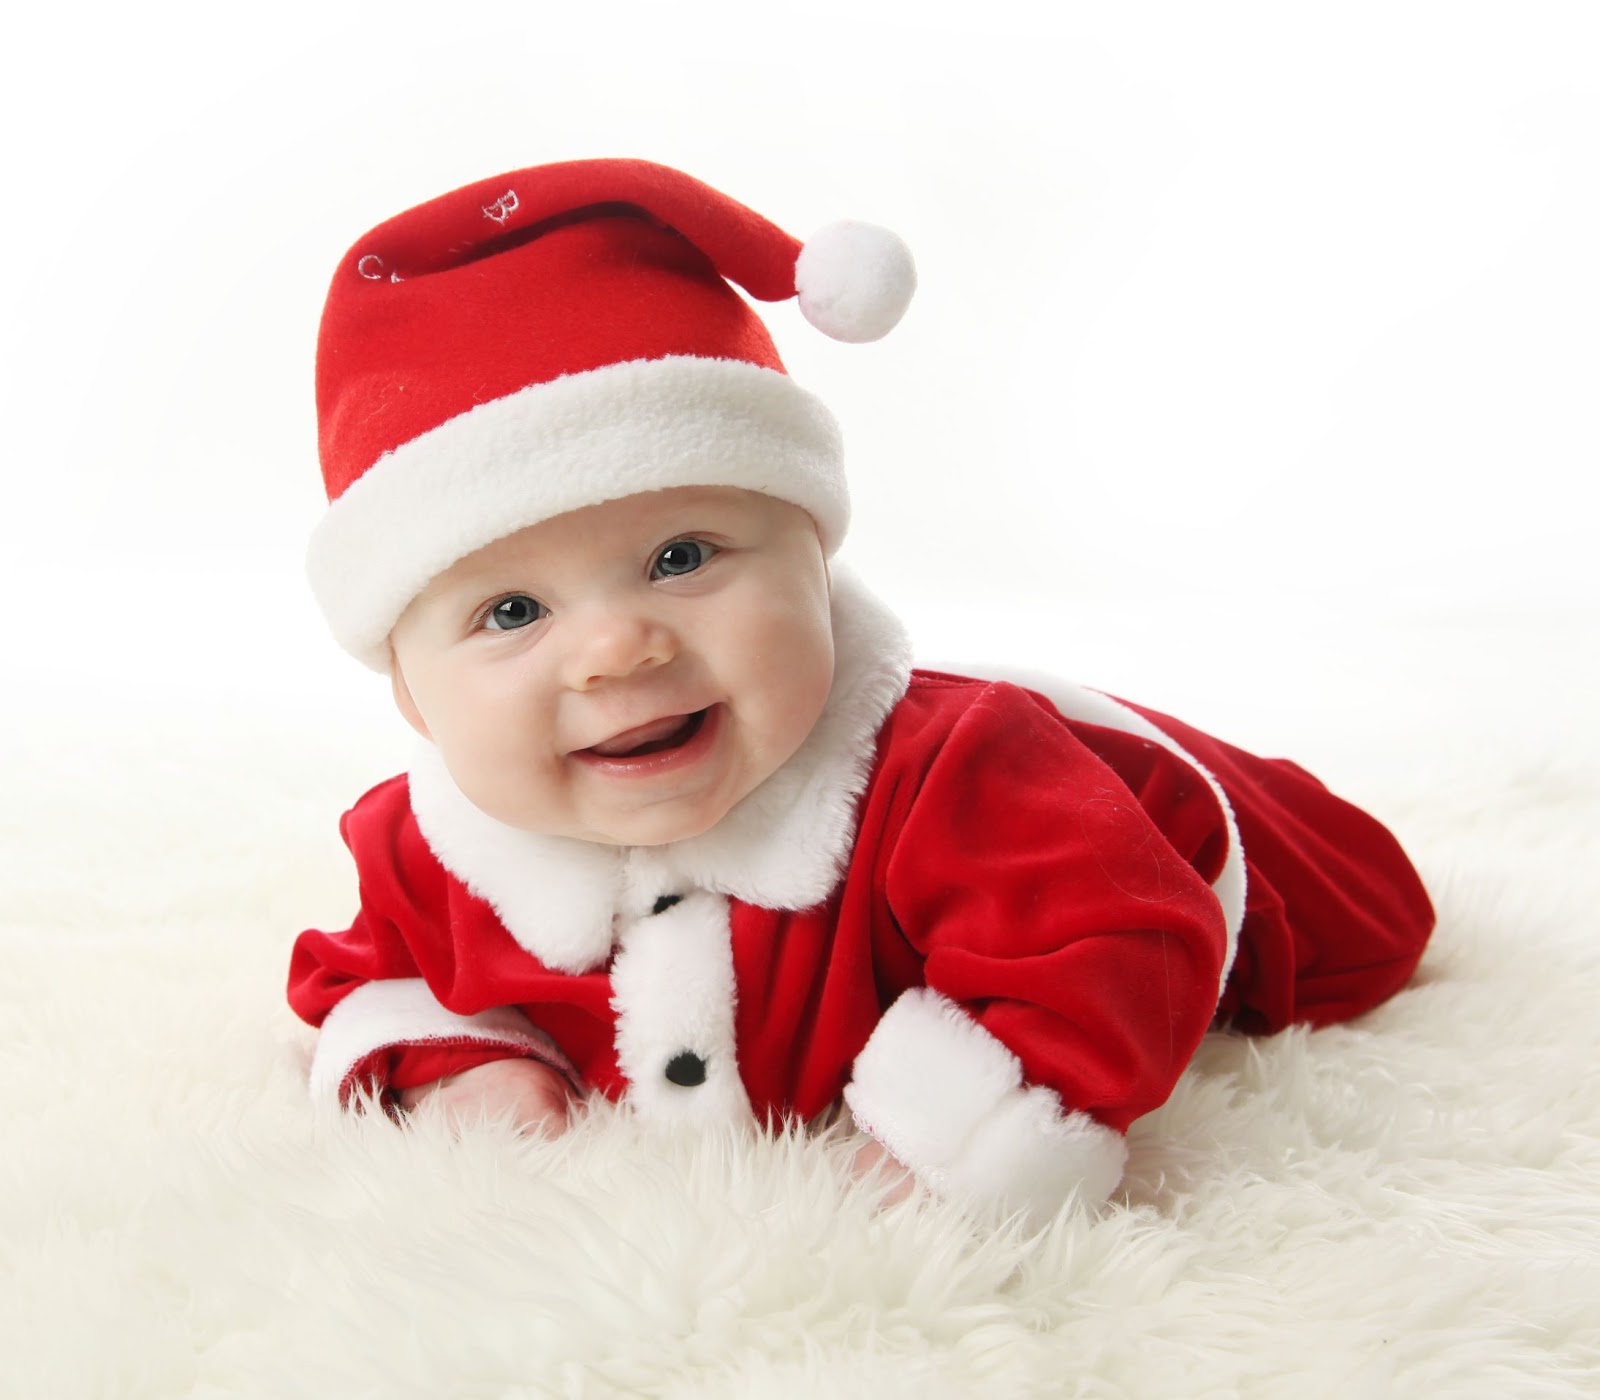 سجل حضورك بصورة طفل Christmas+Baby+2013+Photo